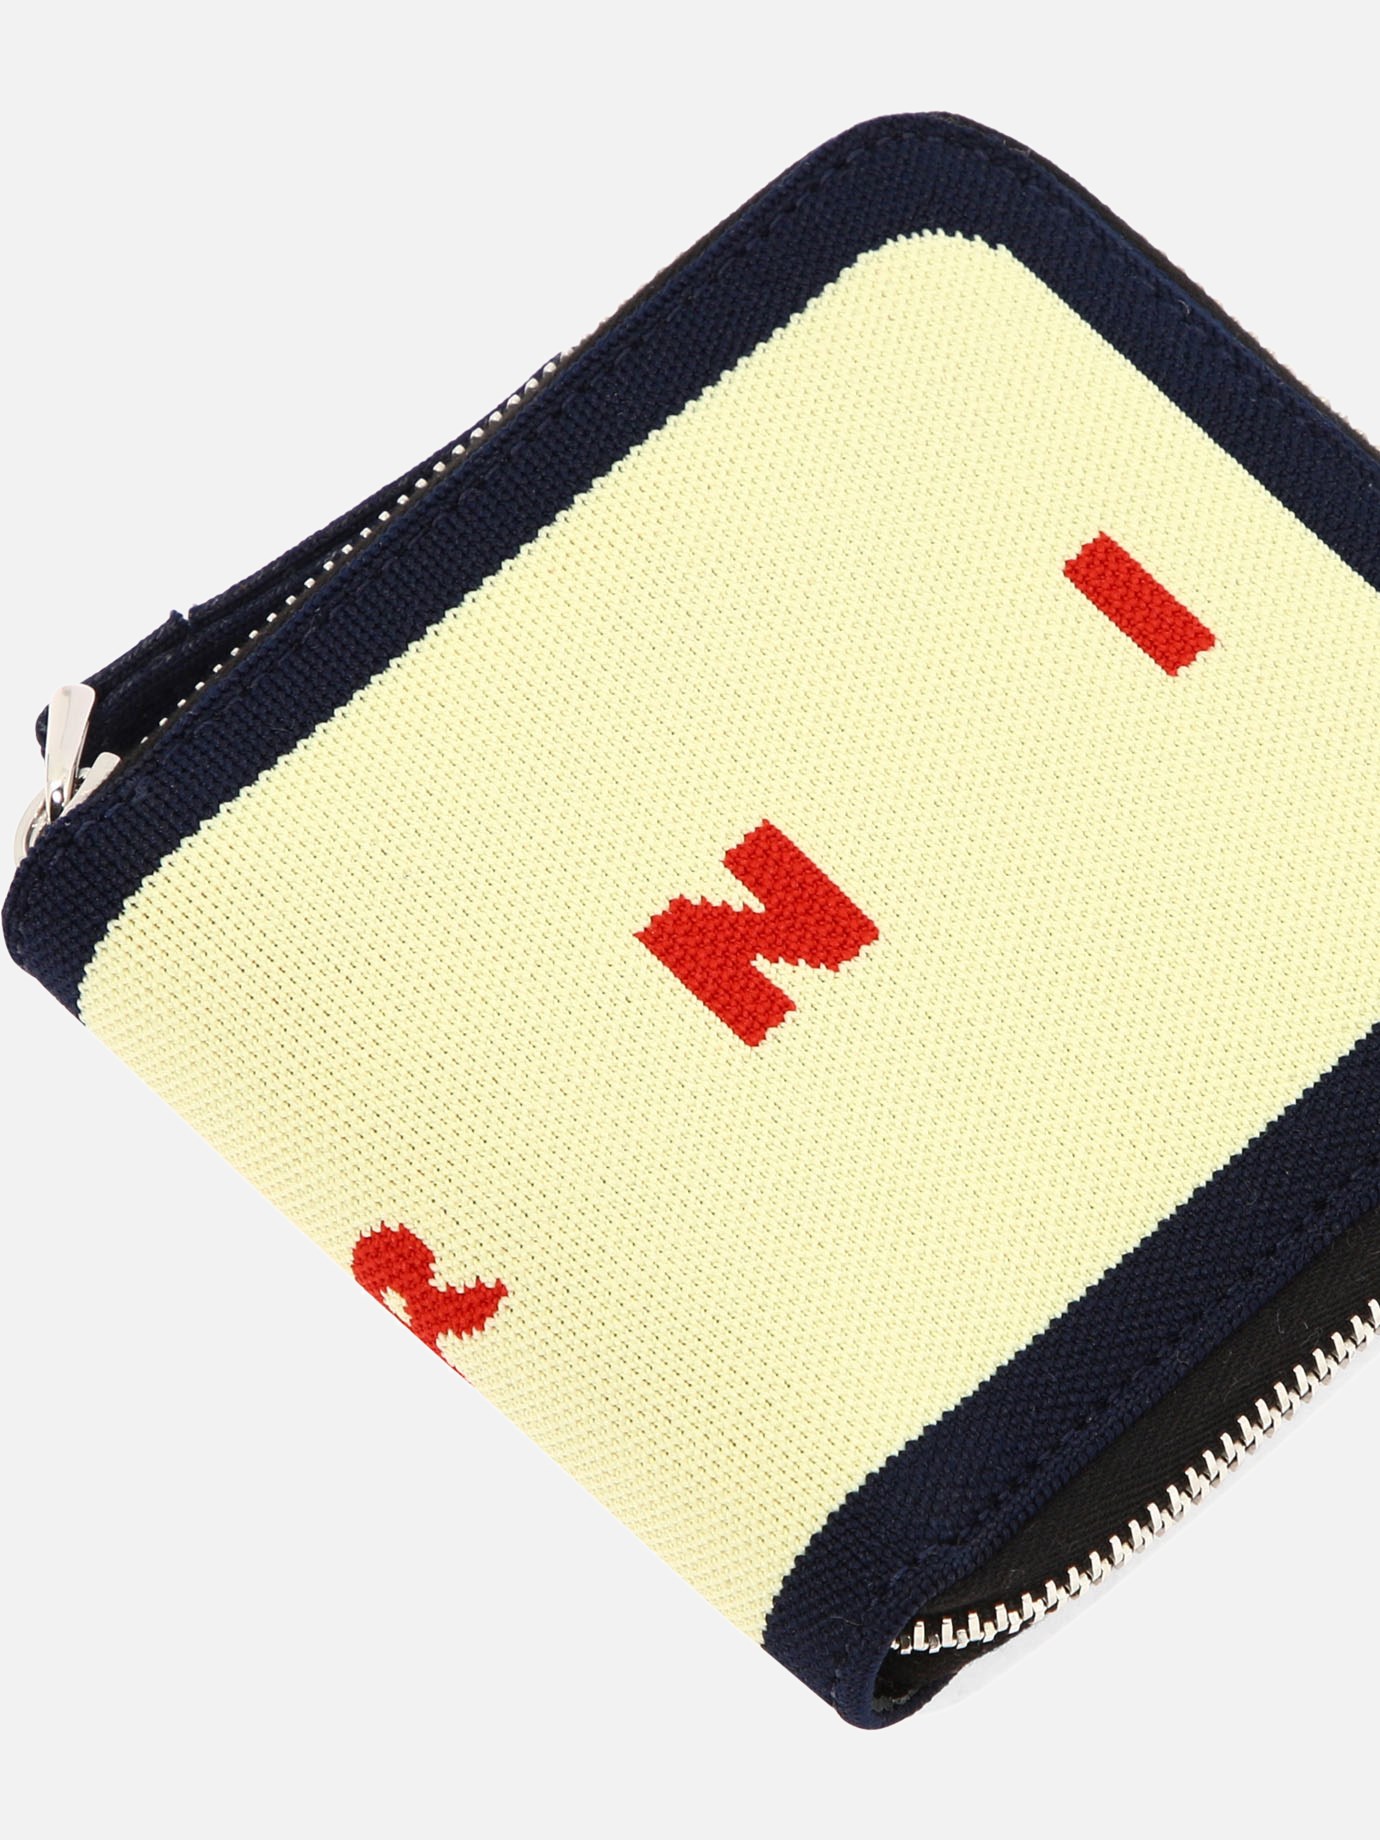 Zipped wallet by Marni